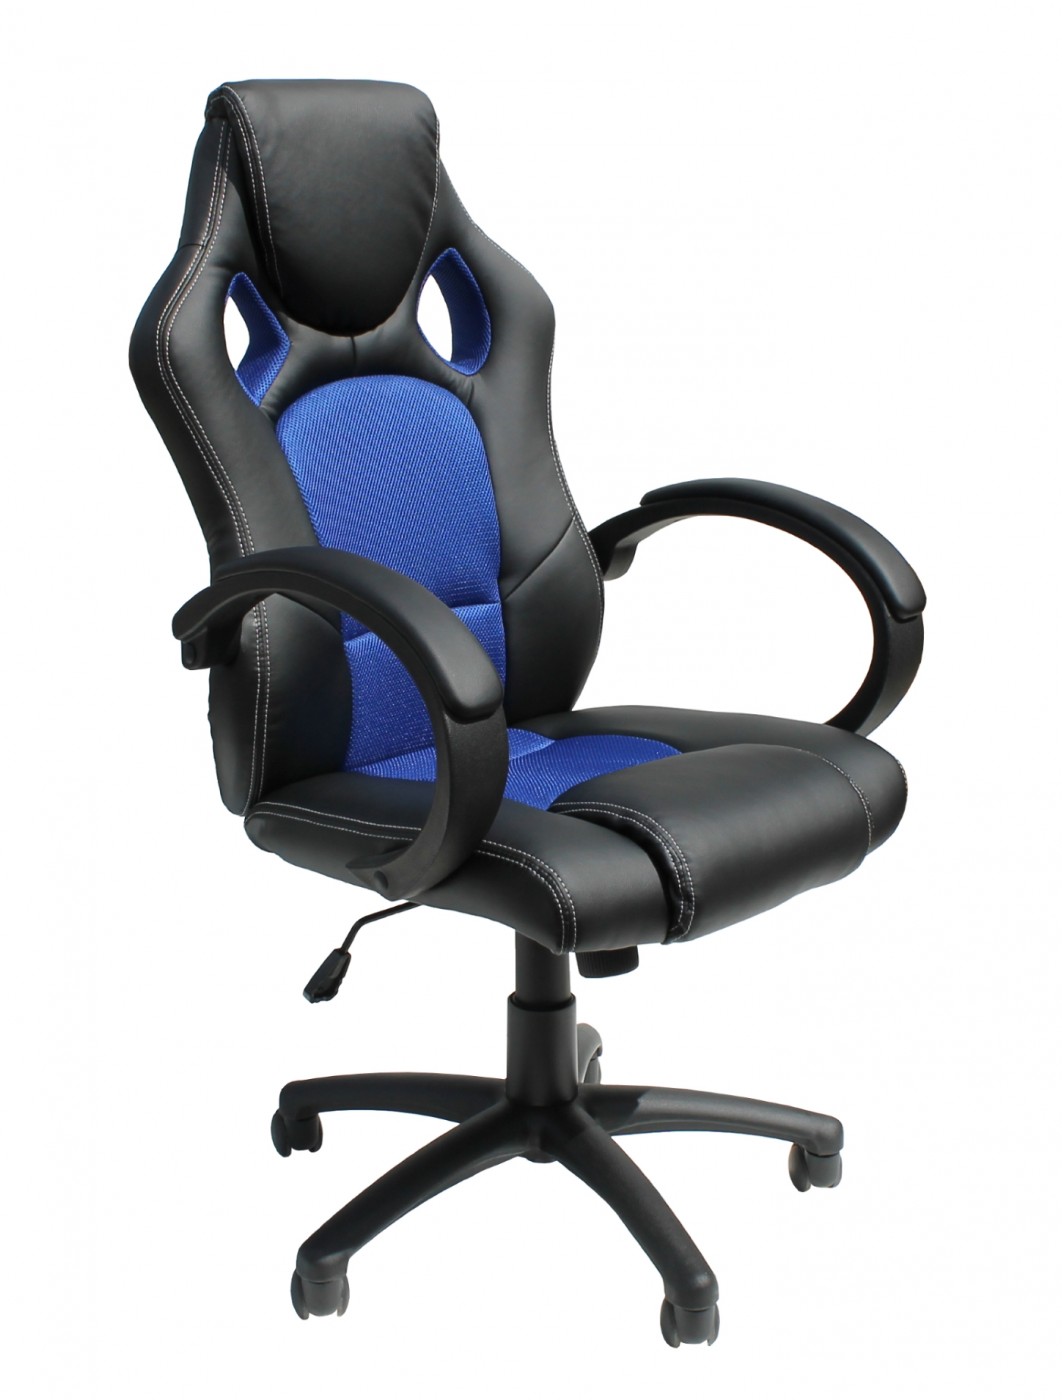 14T7n0RQ Alphason Daytona Gaming Chair Aoc5006blu 1 